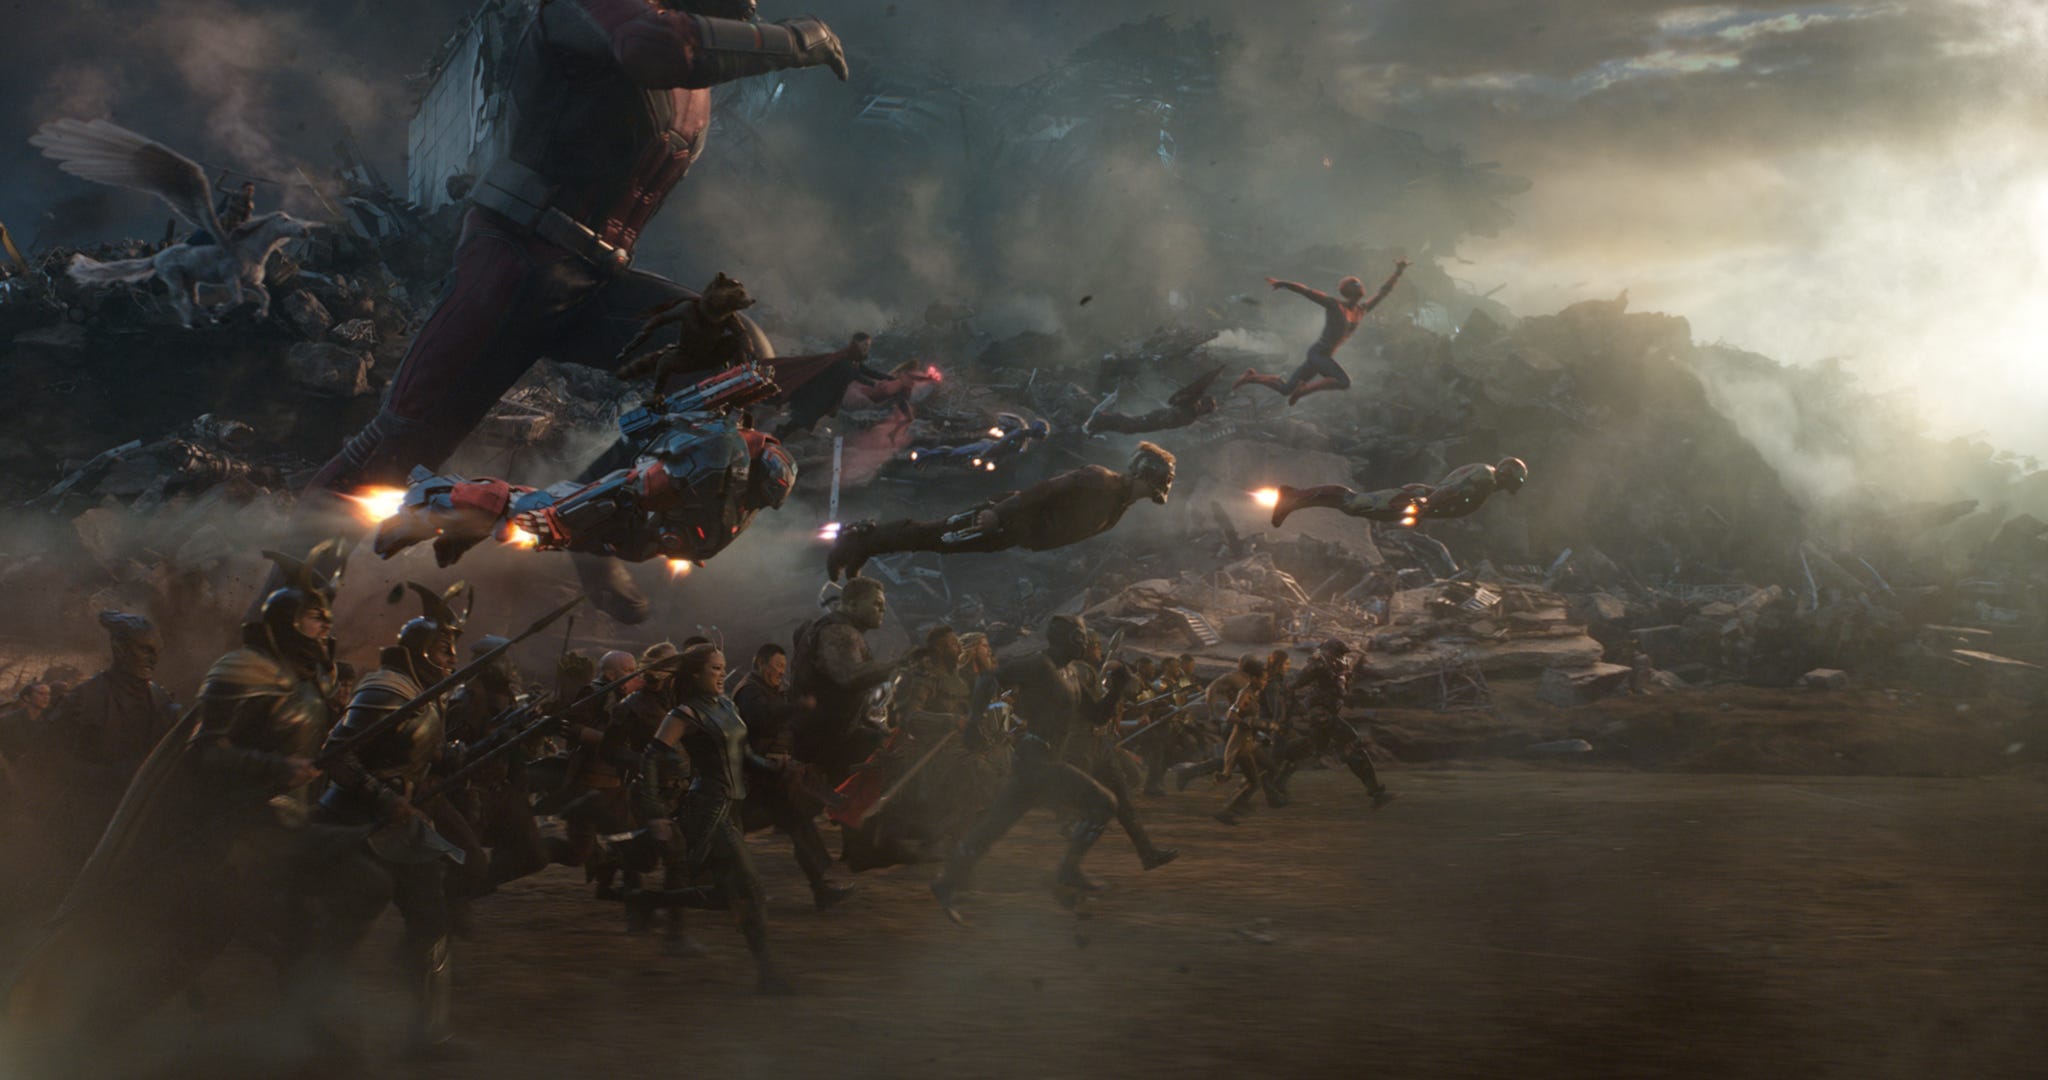 Avengers: Endgame' VFX team manipulated battle scene to make crater look larger